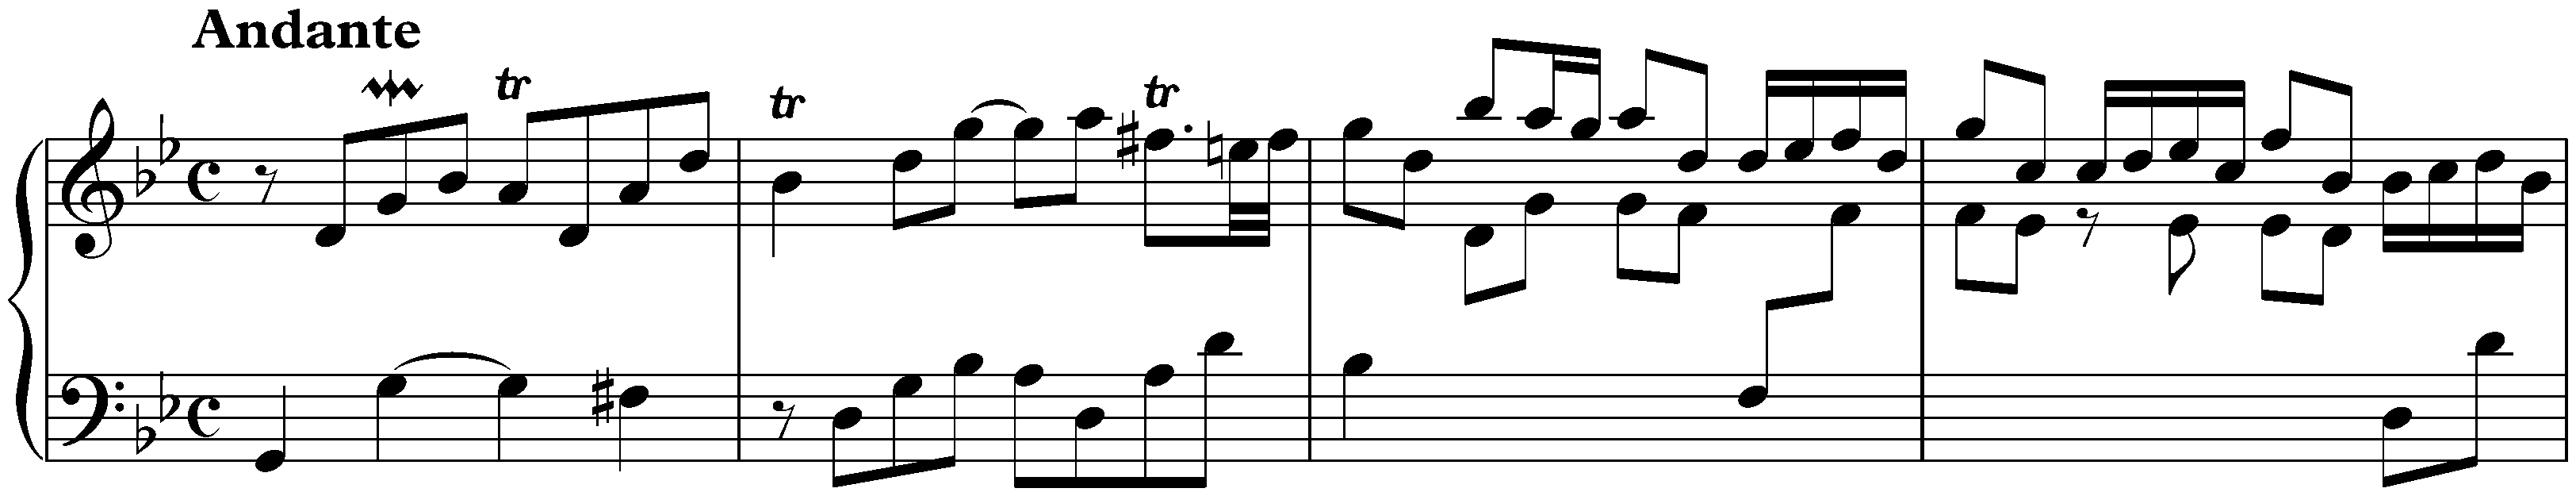 Suite in G minor, HWV 432; 2. Andante